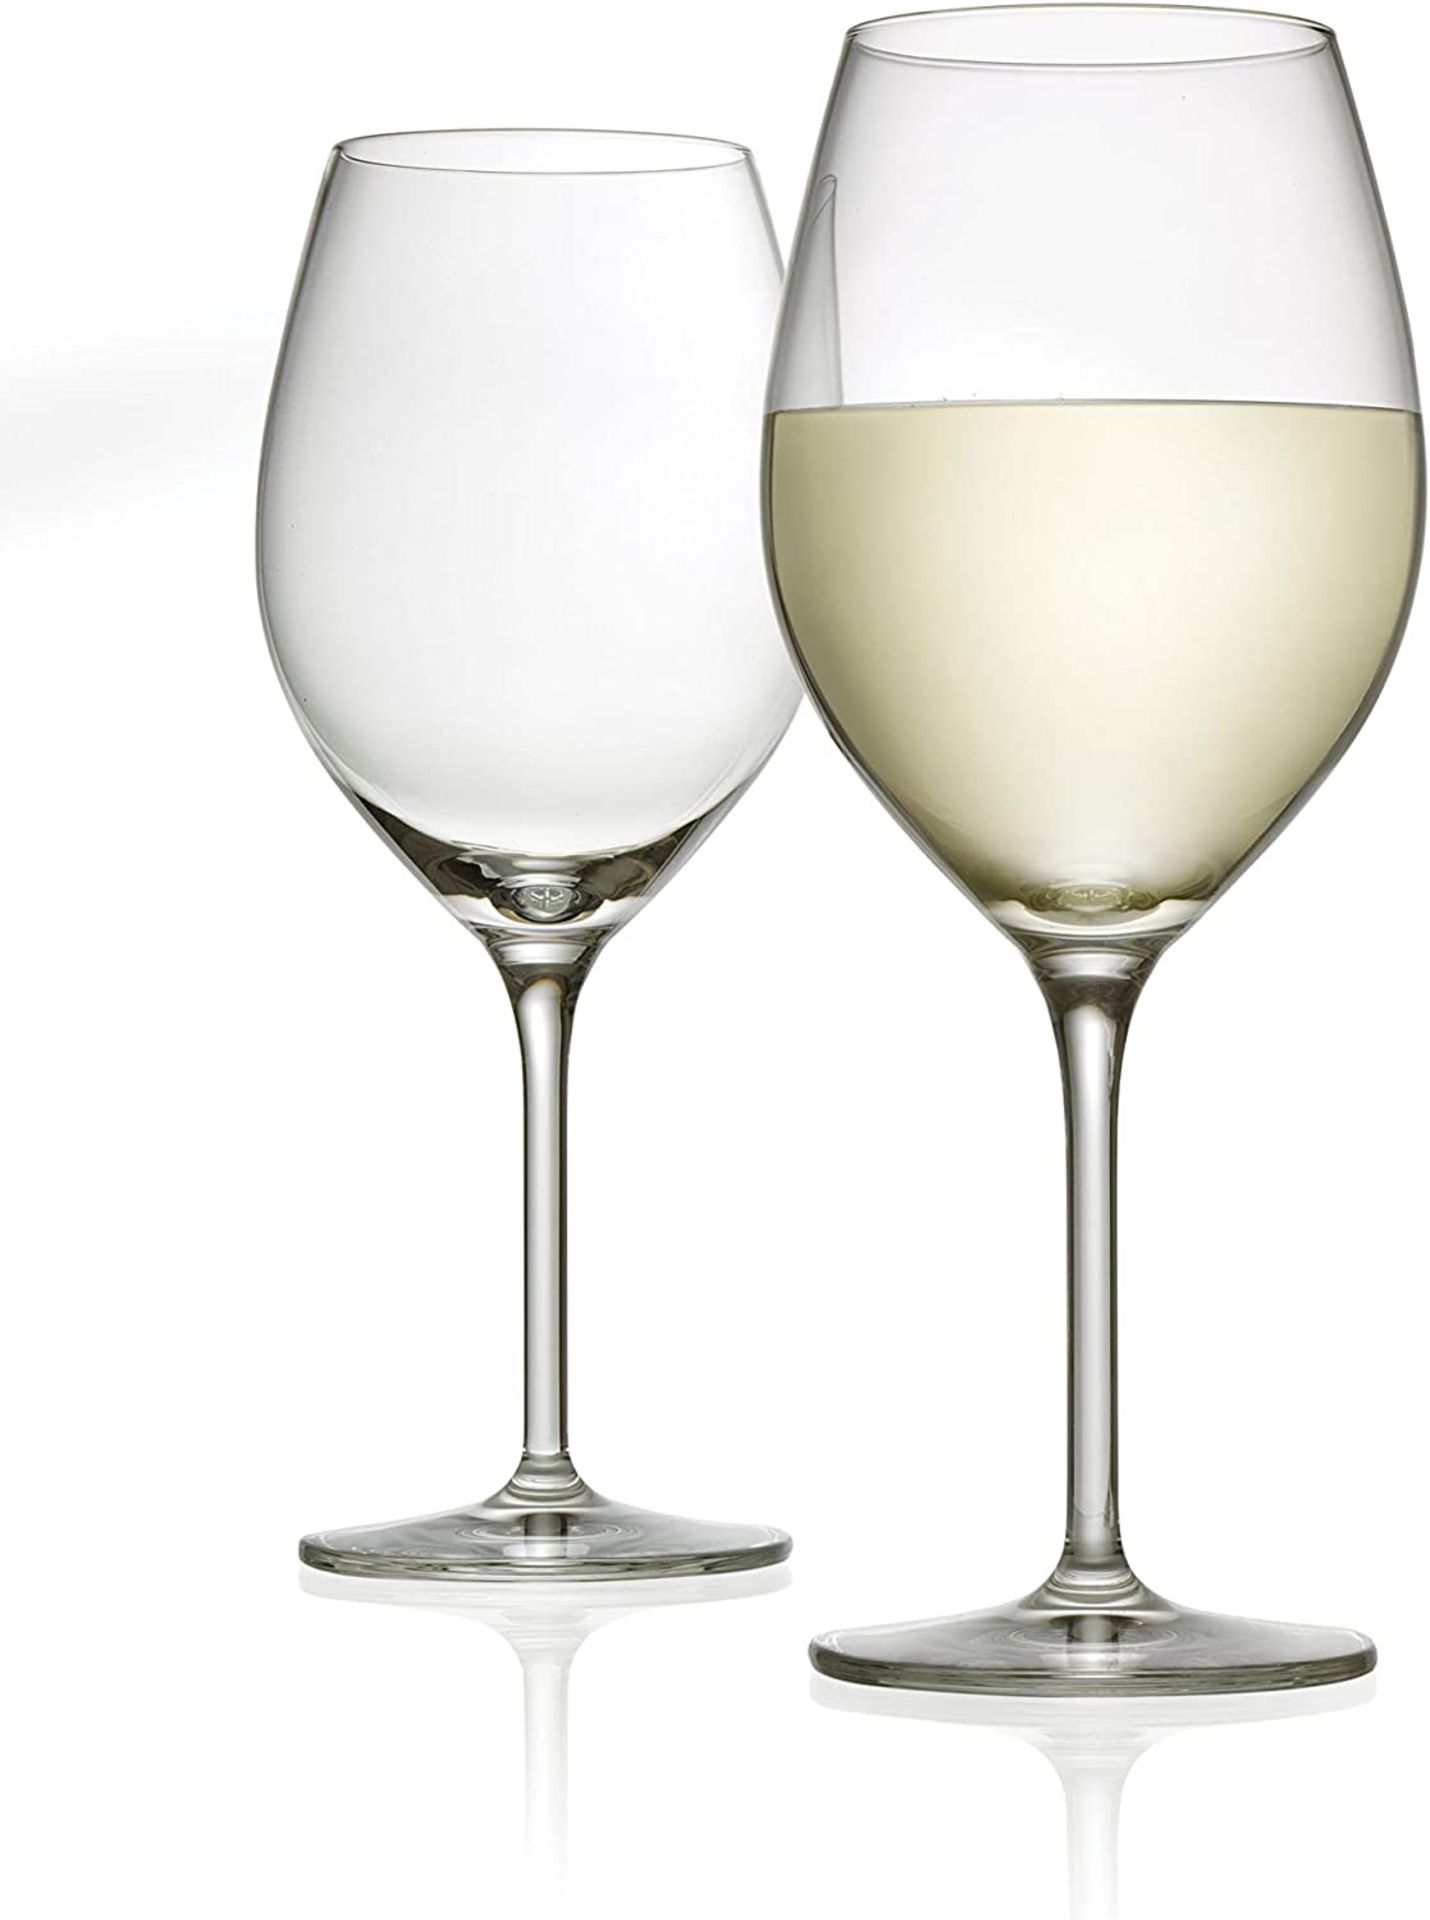 New x2 Schott Zwiesel Cru Classic White Wine Glasses